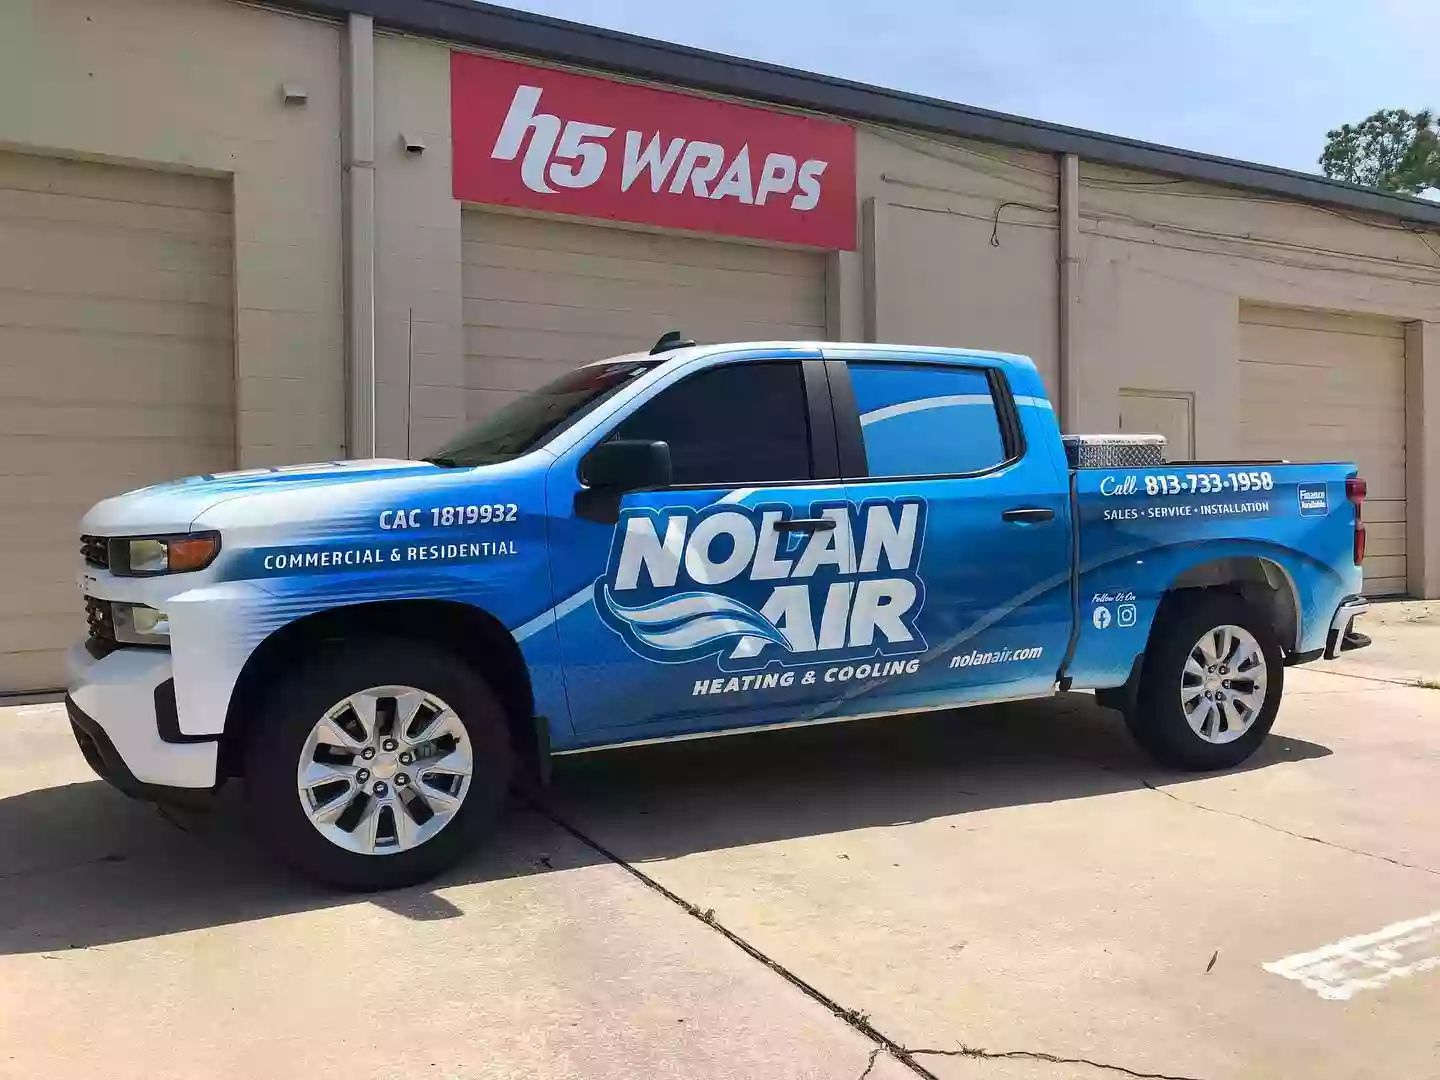 Nolan Air Heating & Cooling